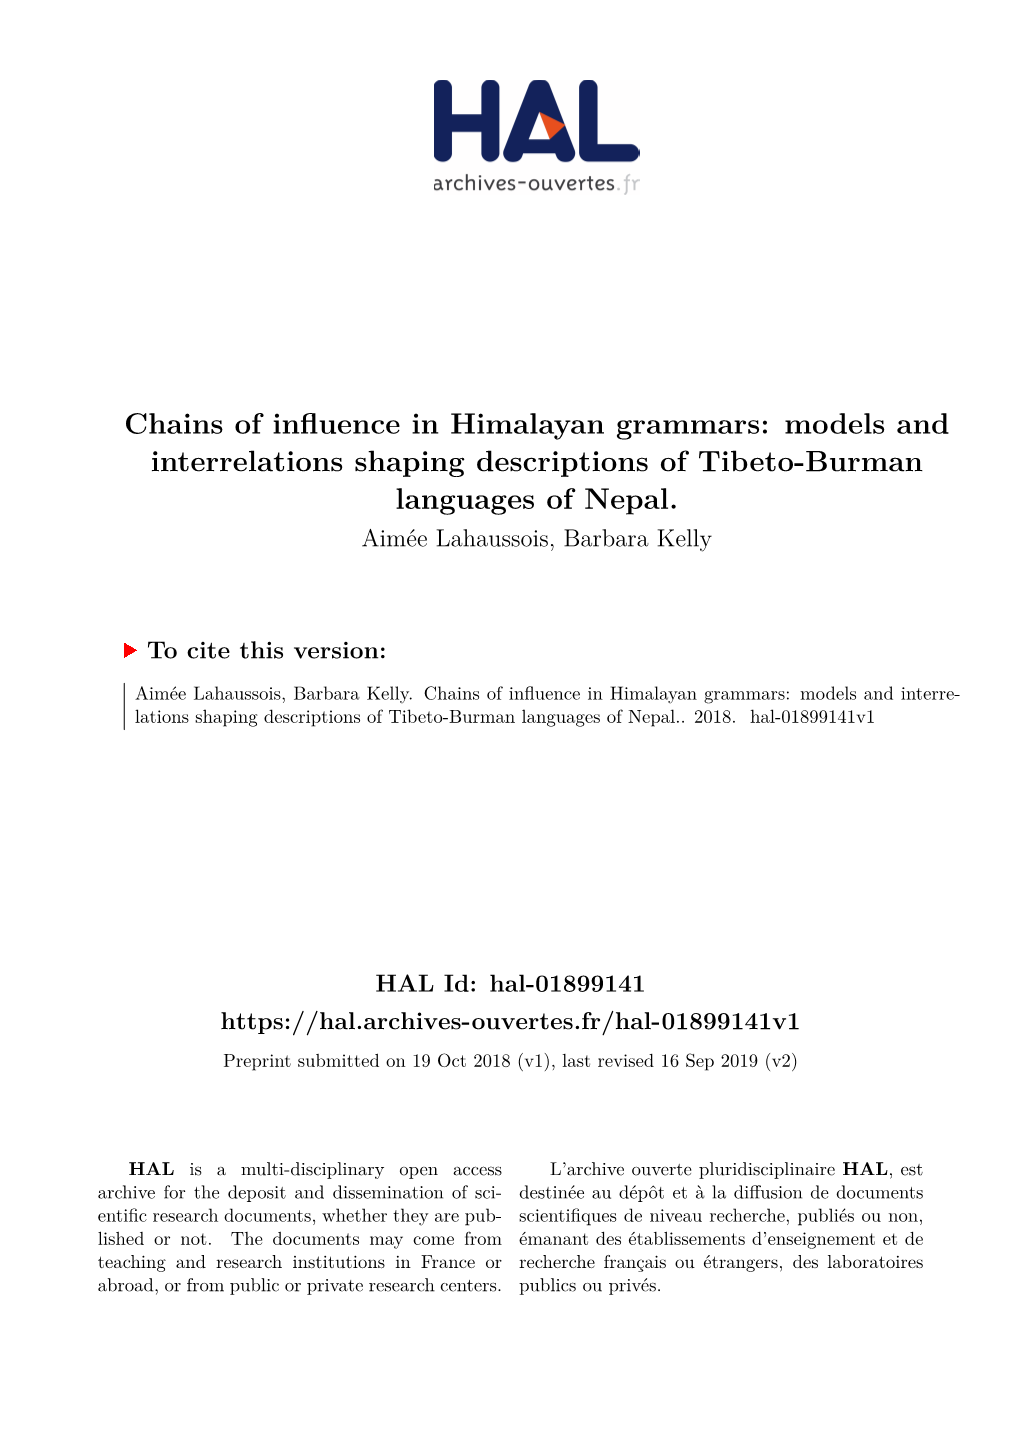 Models and Interrelations Shaping Descriptions of Tibeto-Burman Languages of Nepal. Aimée Lahaussois, Barbara Kelly